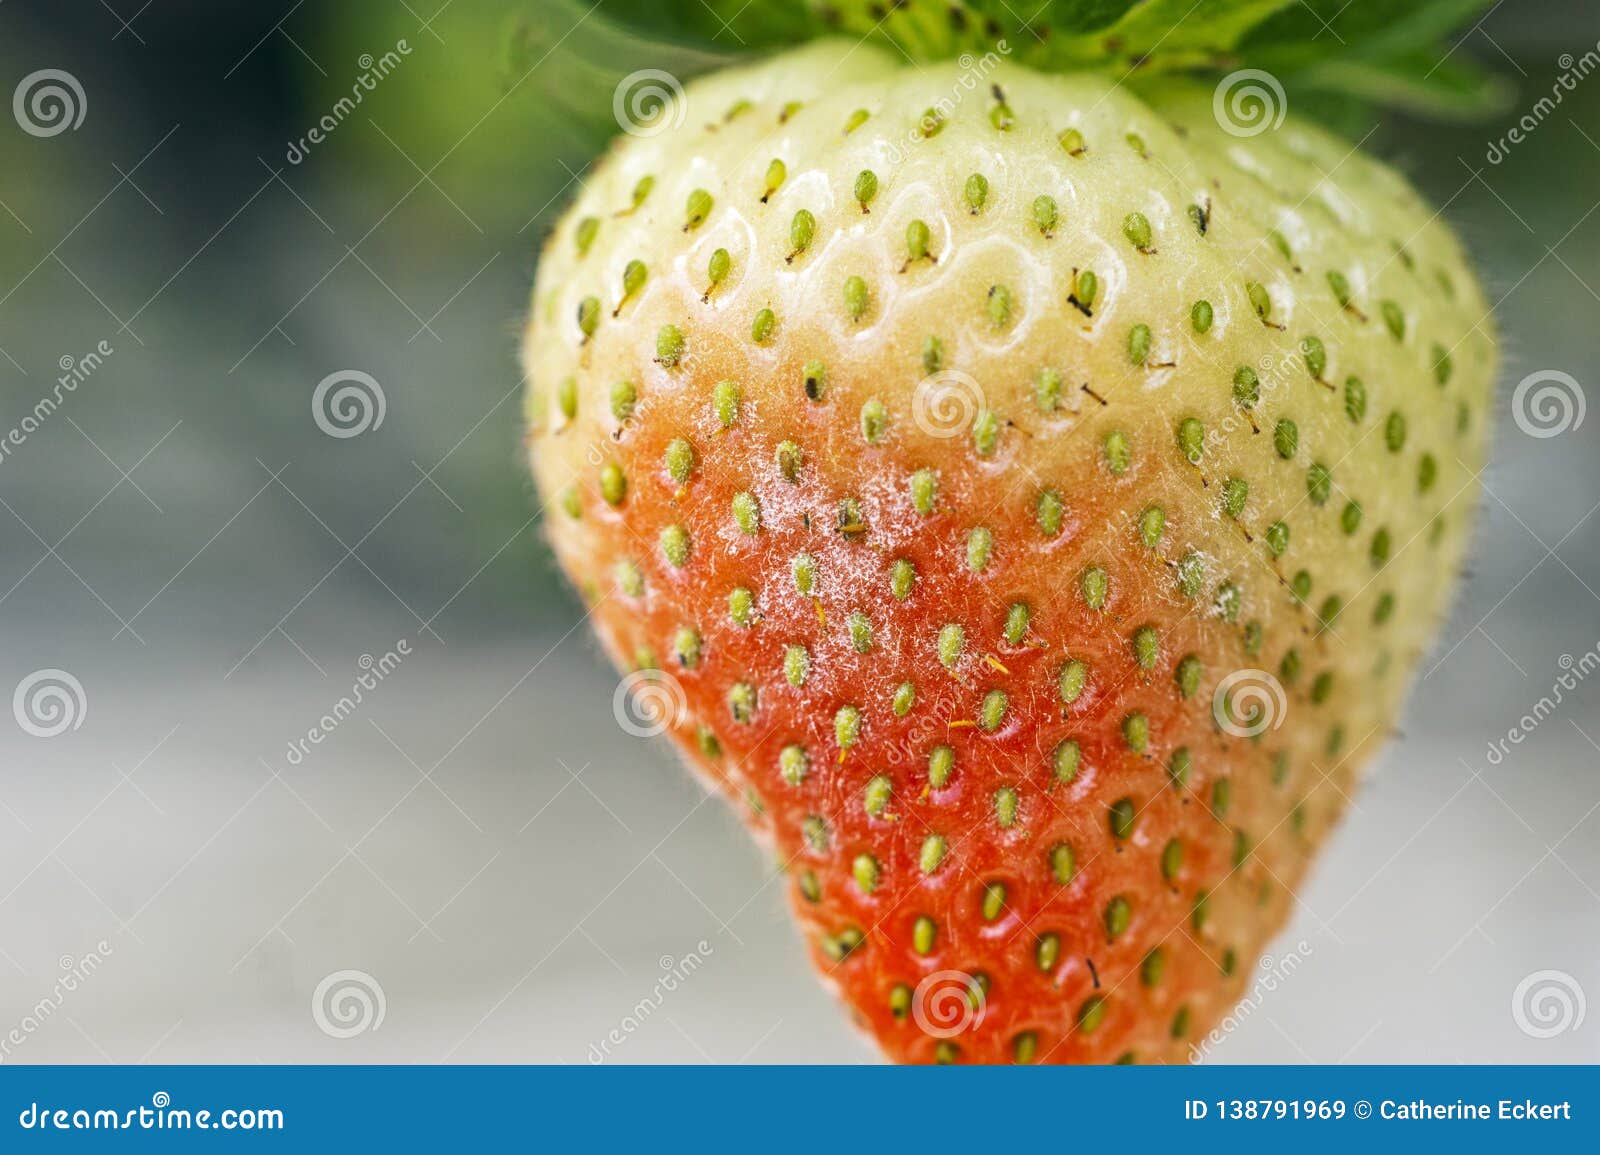 powdery mildew podosphaera aphanis fungal growth on a ripening strawberry fruit